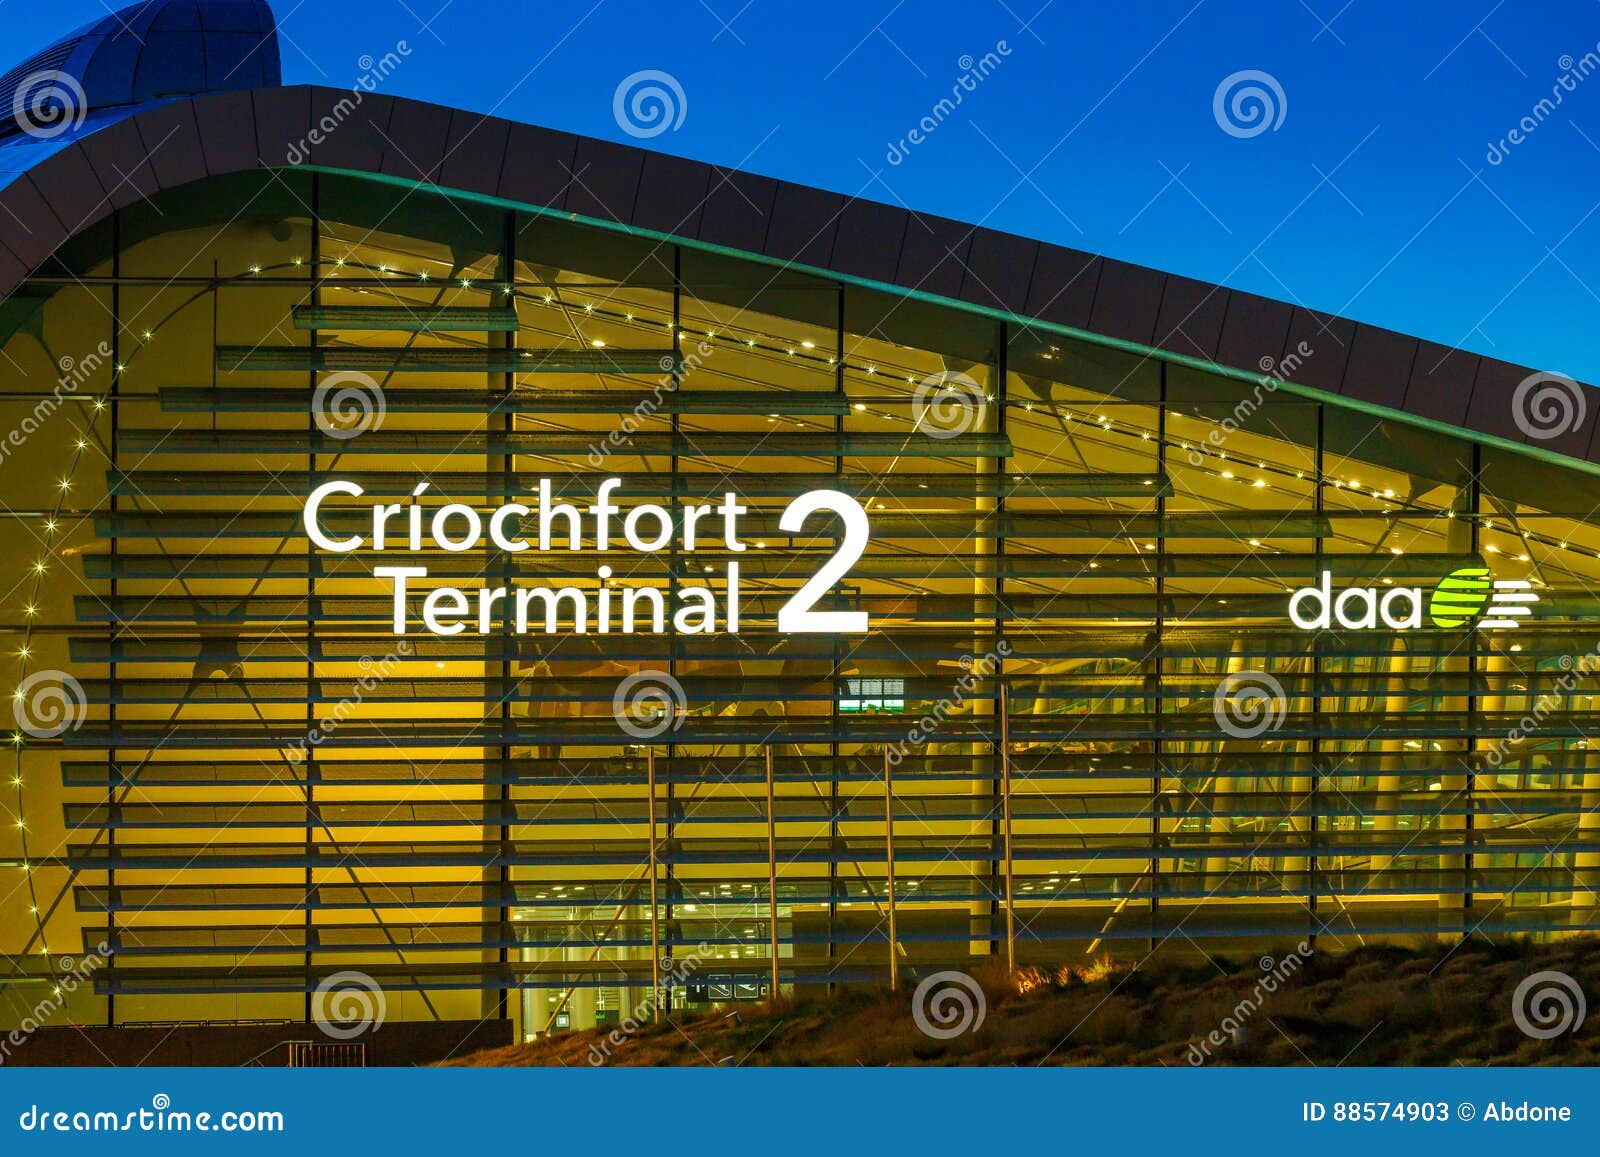 Dublin Airport, Terminal 2 & Campus Development • Aviation • Work •  Pascall+Watson